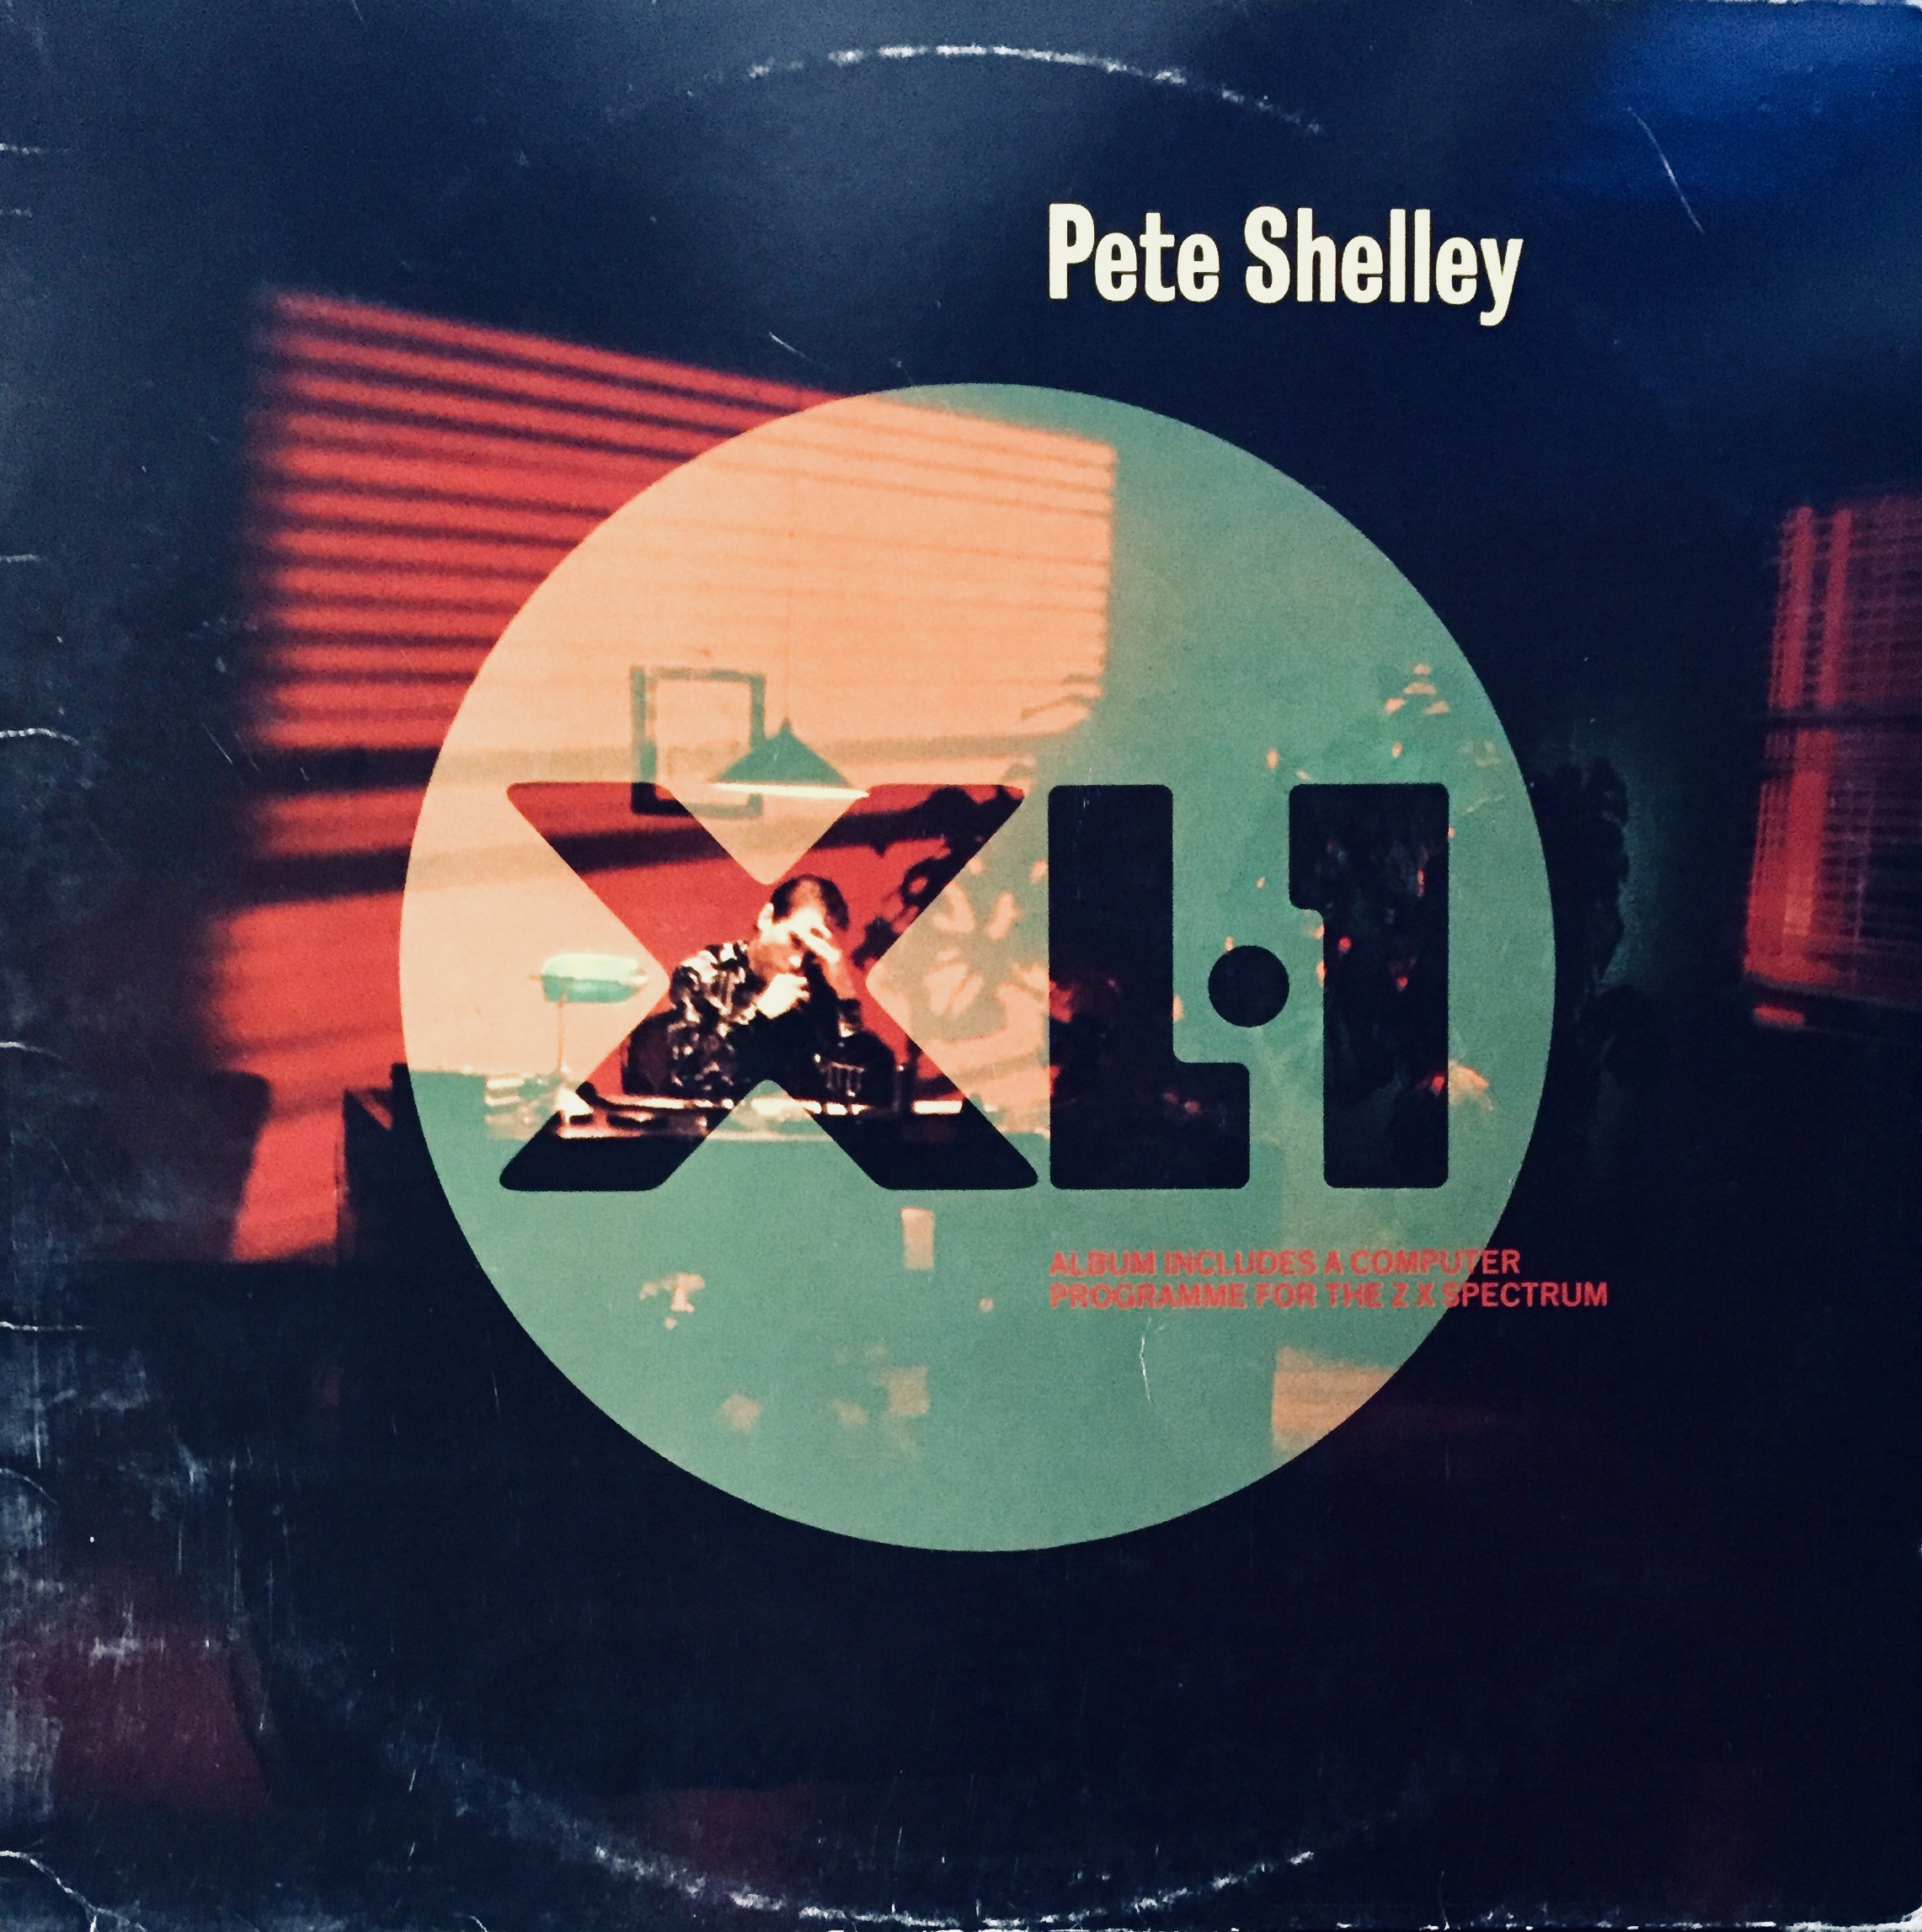 Pete Shelley: XL•1 (Genetic Records 1983).